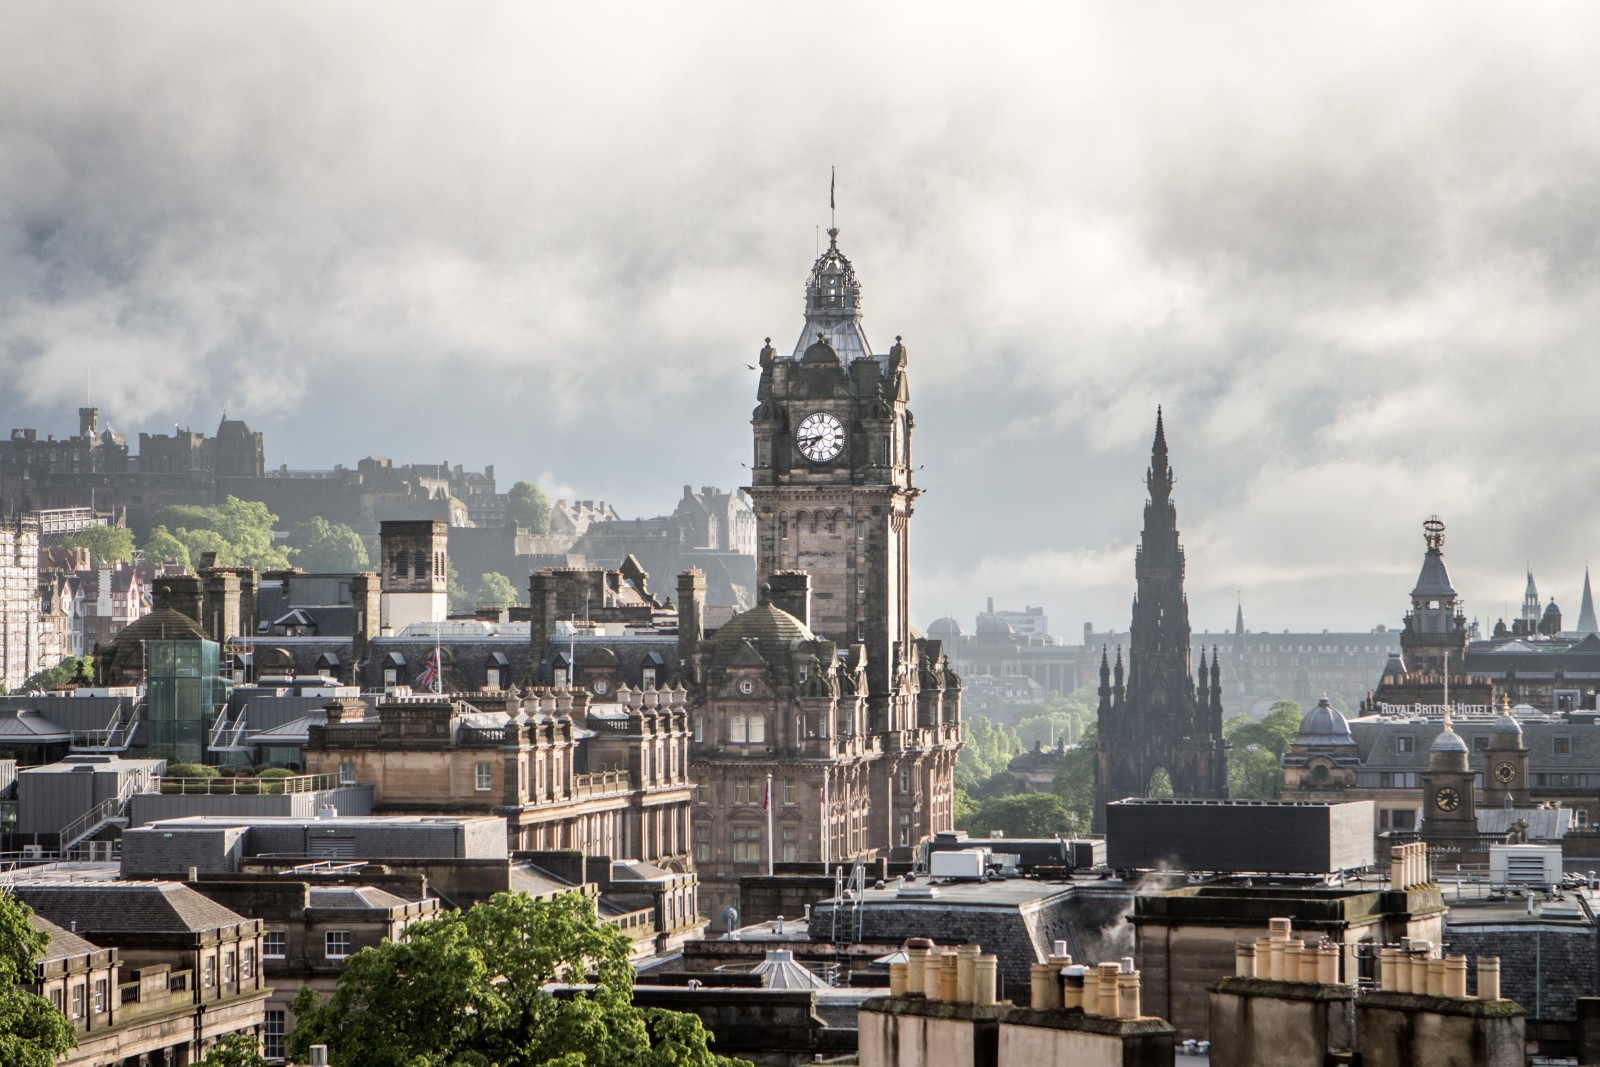 The skyline of the city of Edinburgh. 